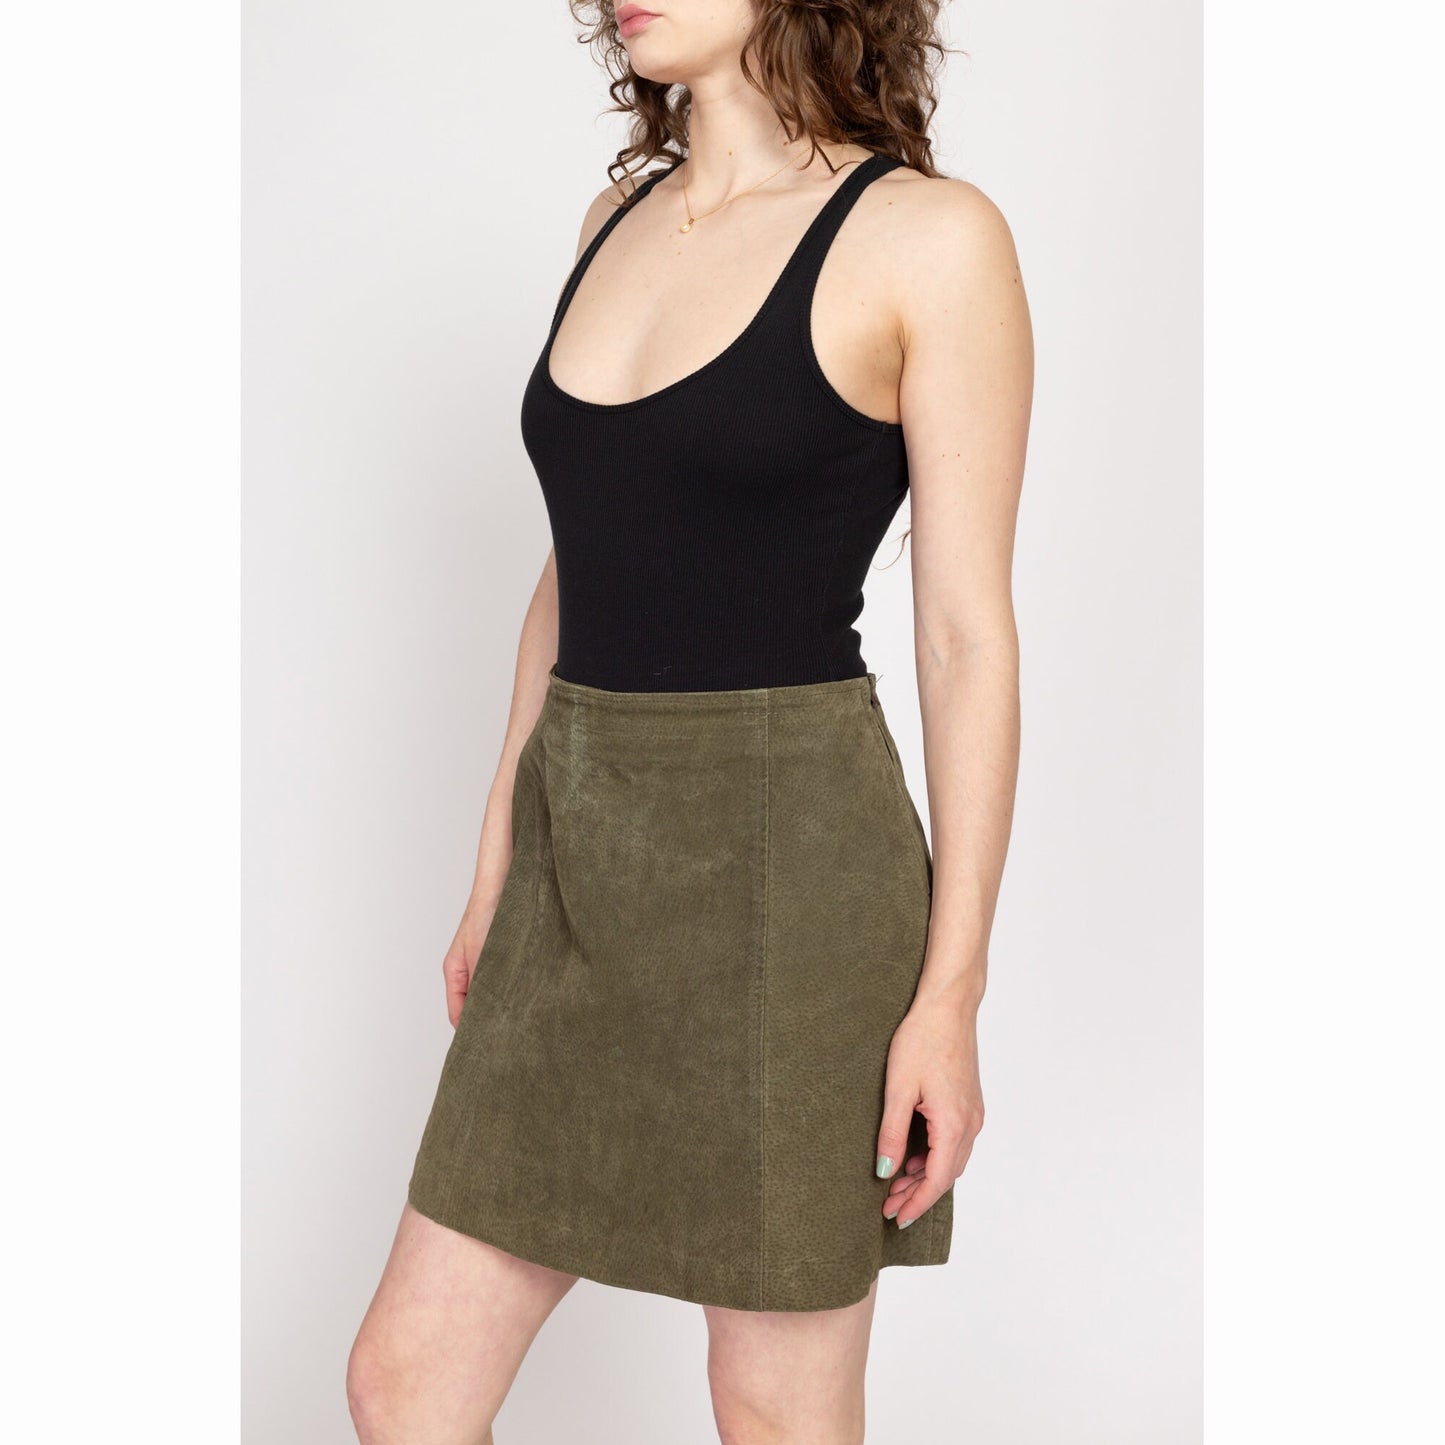 Medium 90s Olive Green Suede Mini Skirt 29" | Vintage High Waisted A Line Skirt